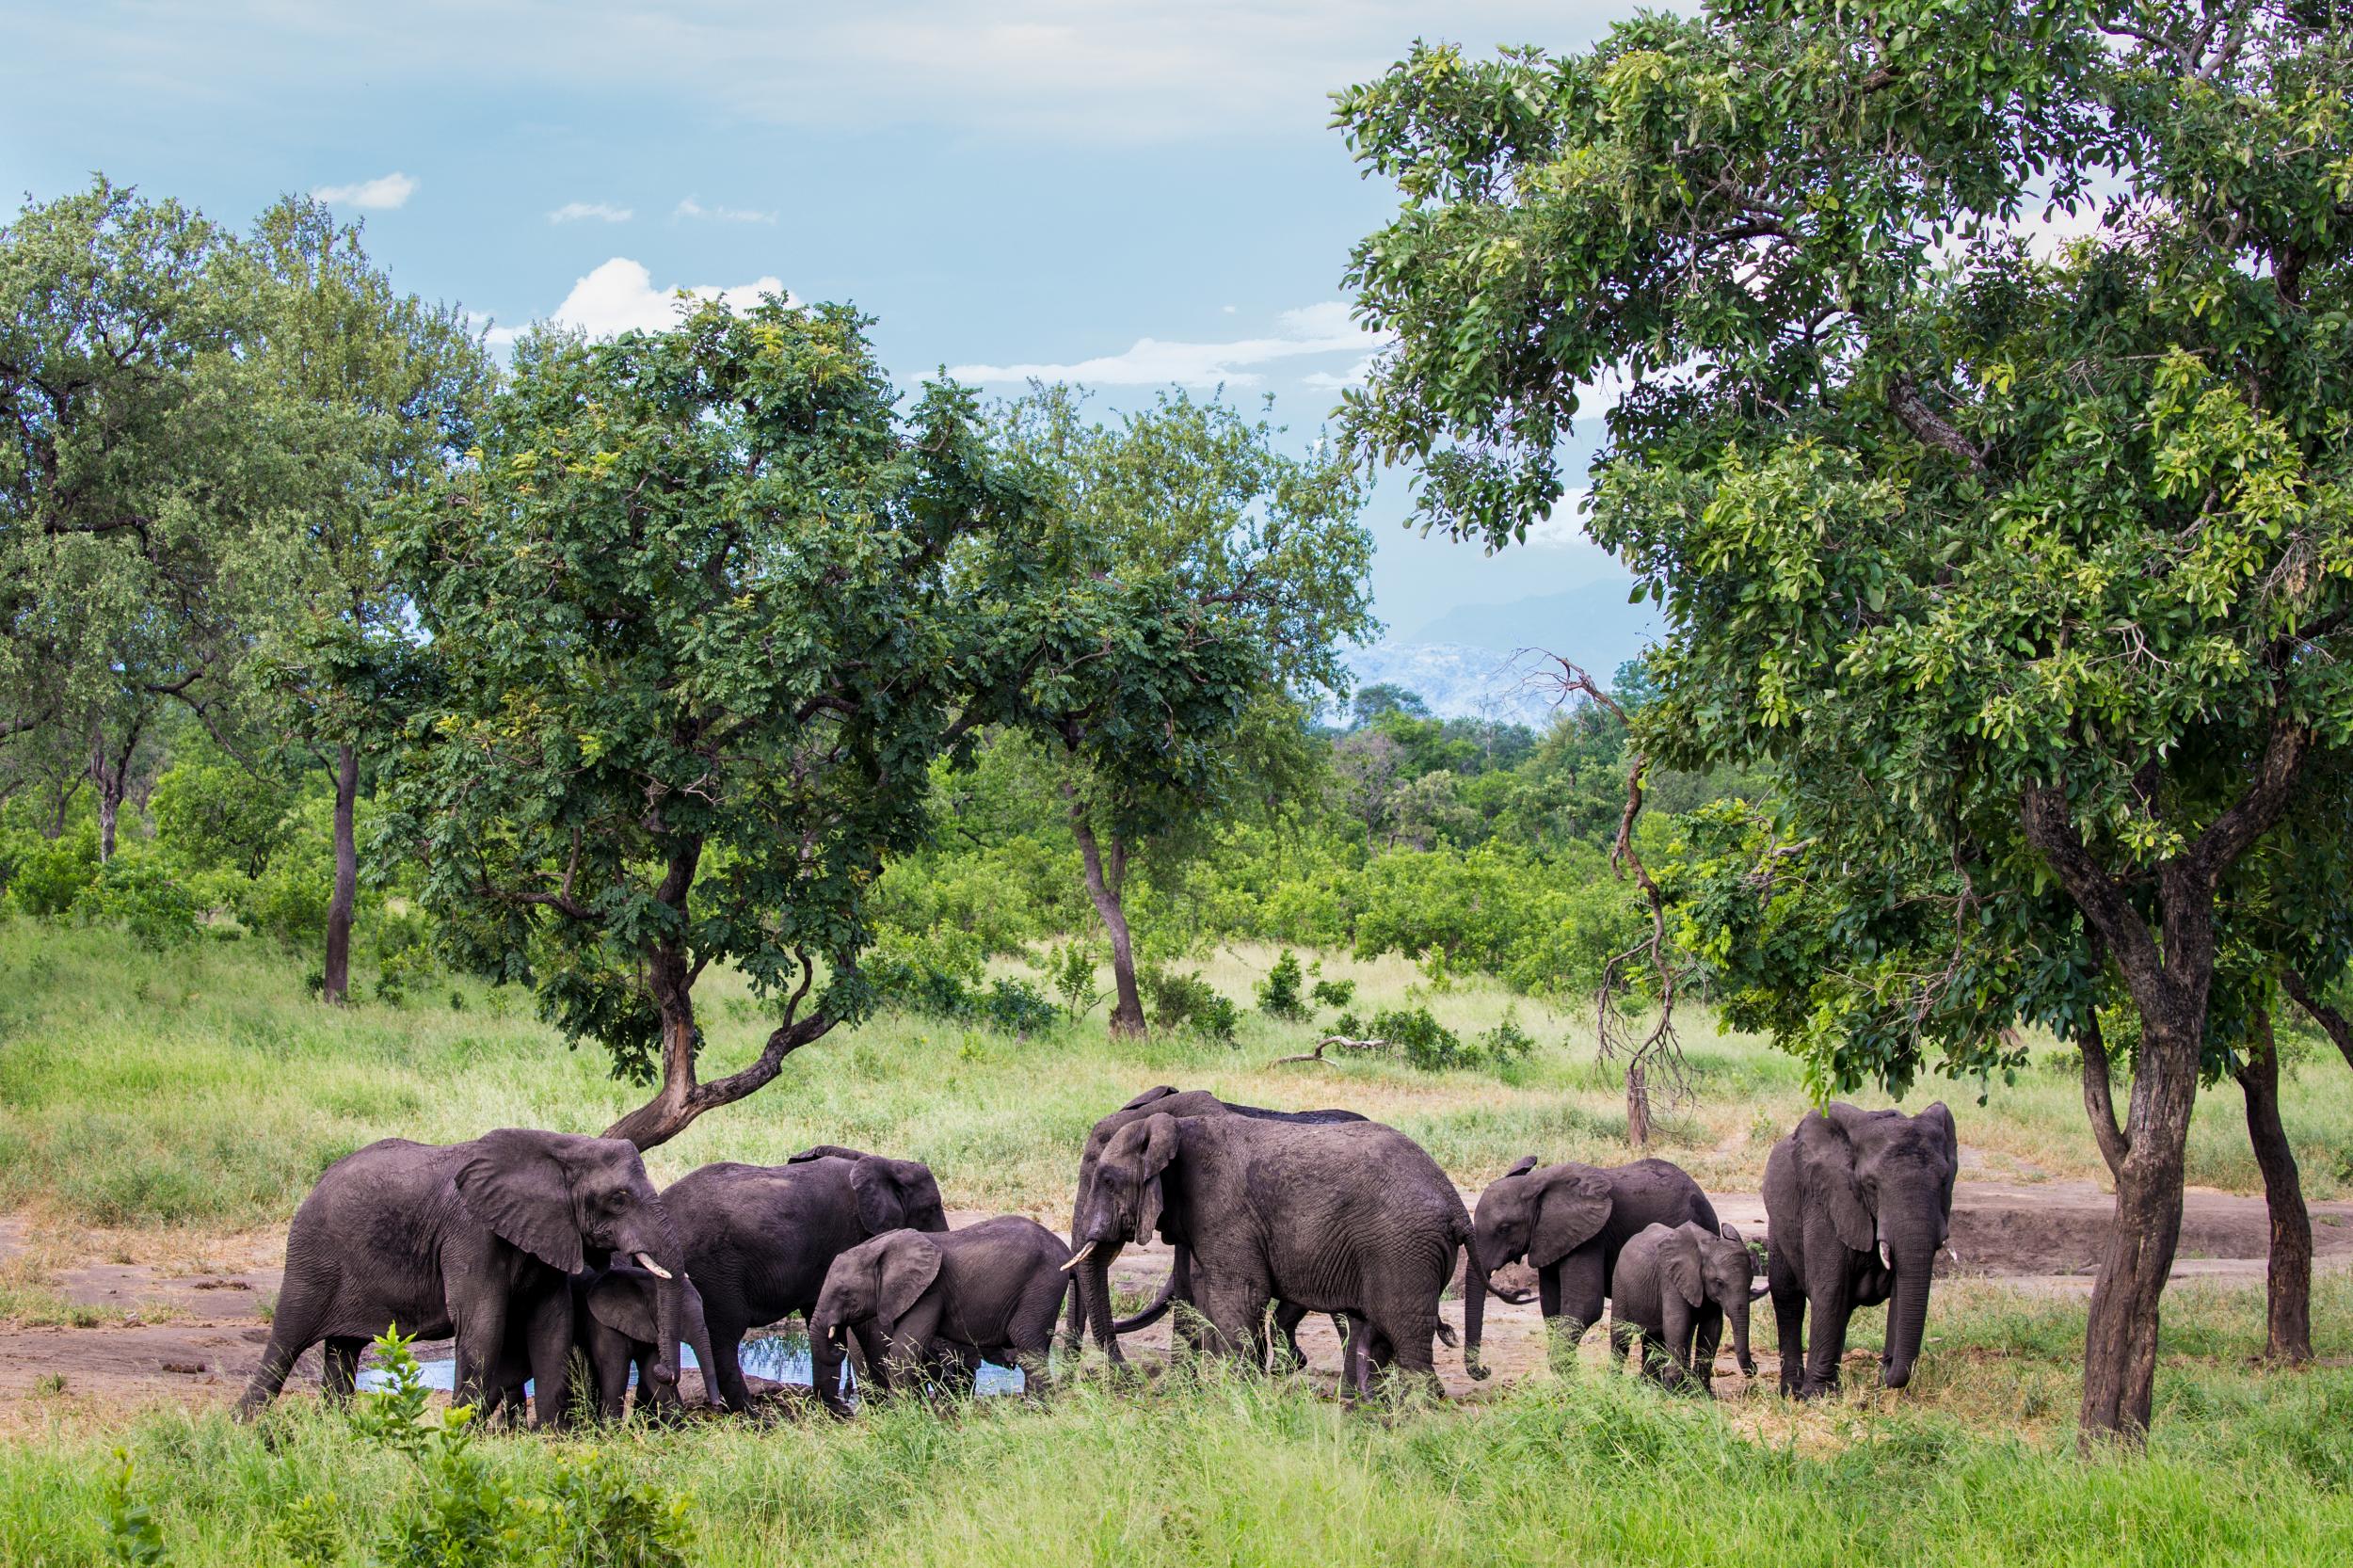 Meet elephants at Majete National Park in Malawi